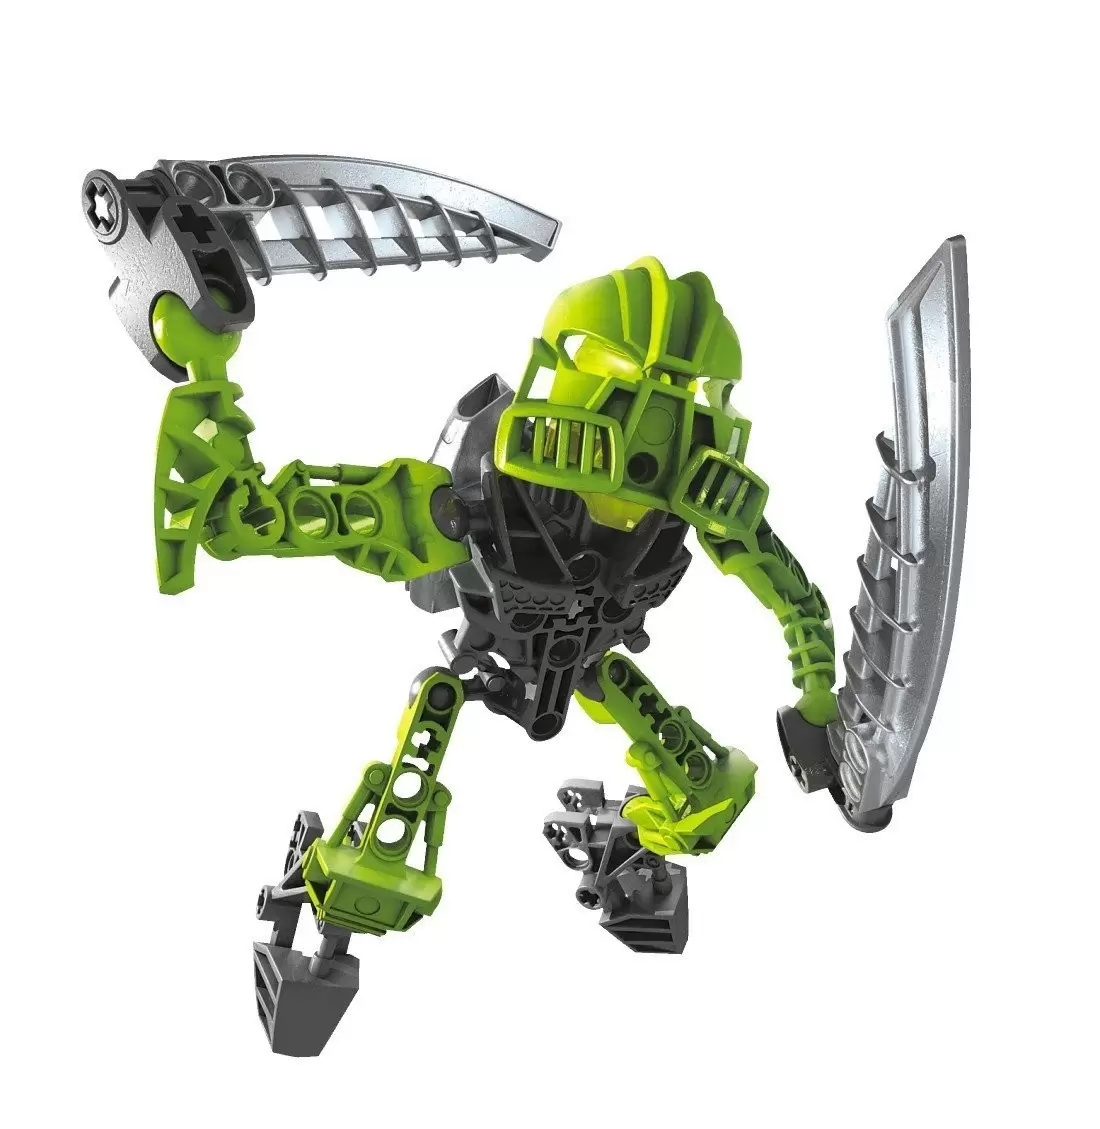 Tanma - LEGO Bionicle set 8944